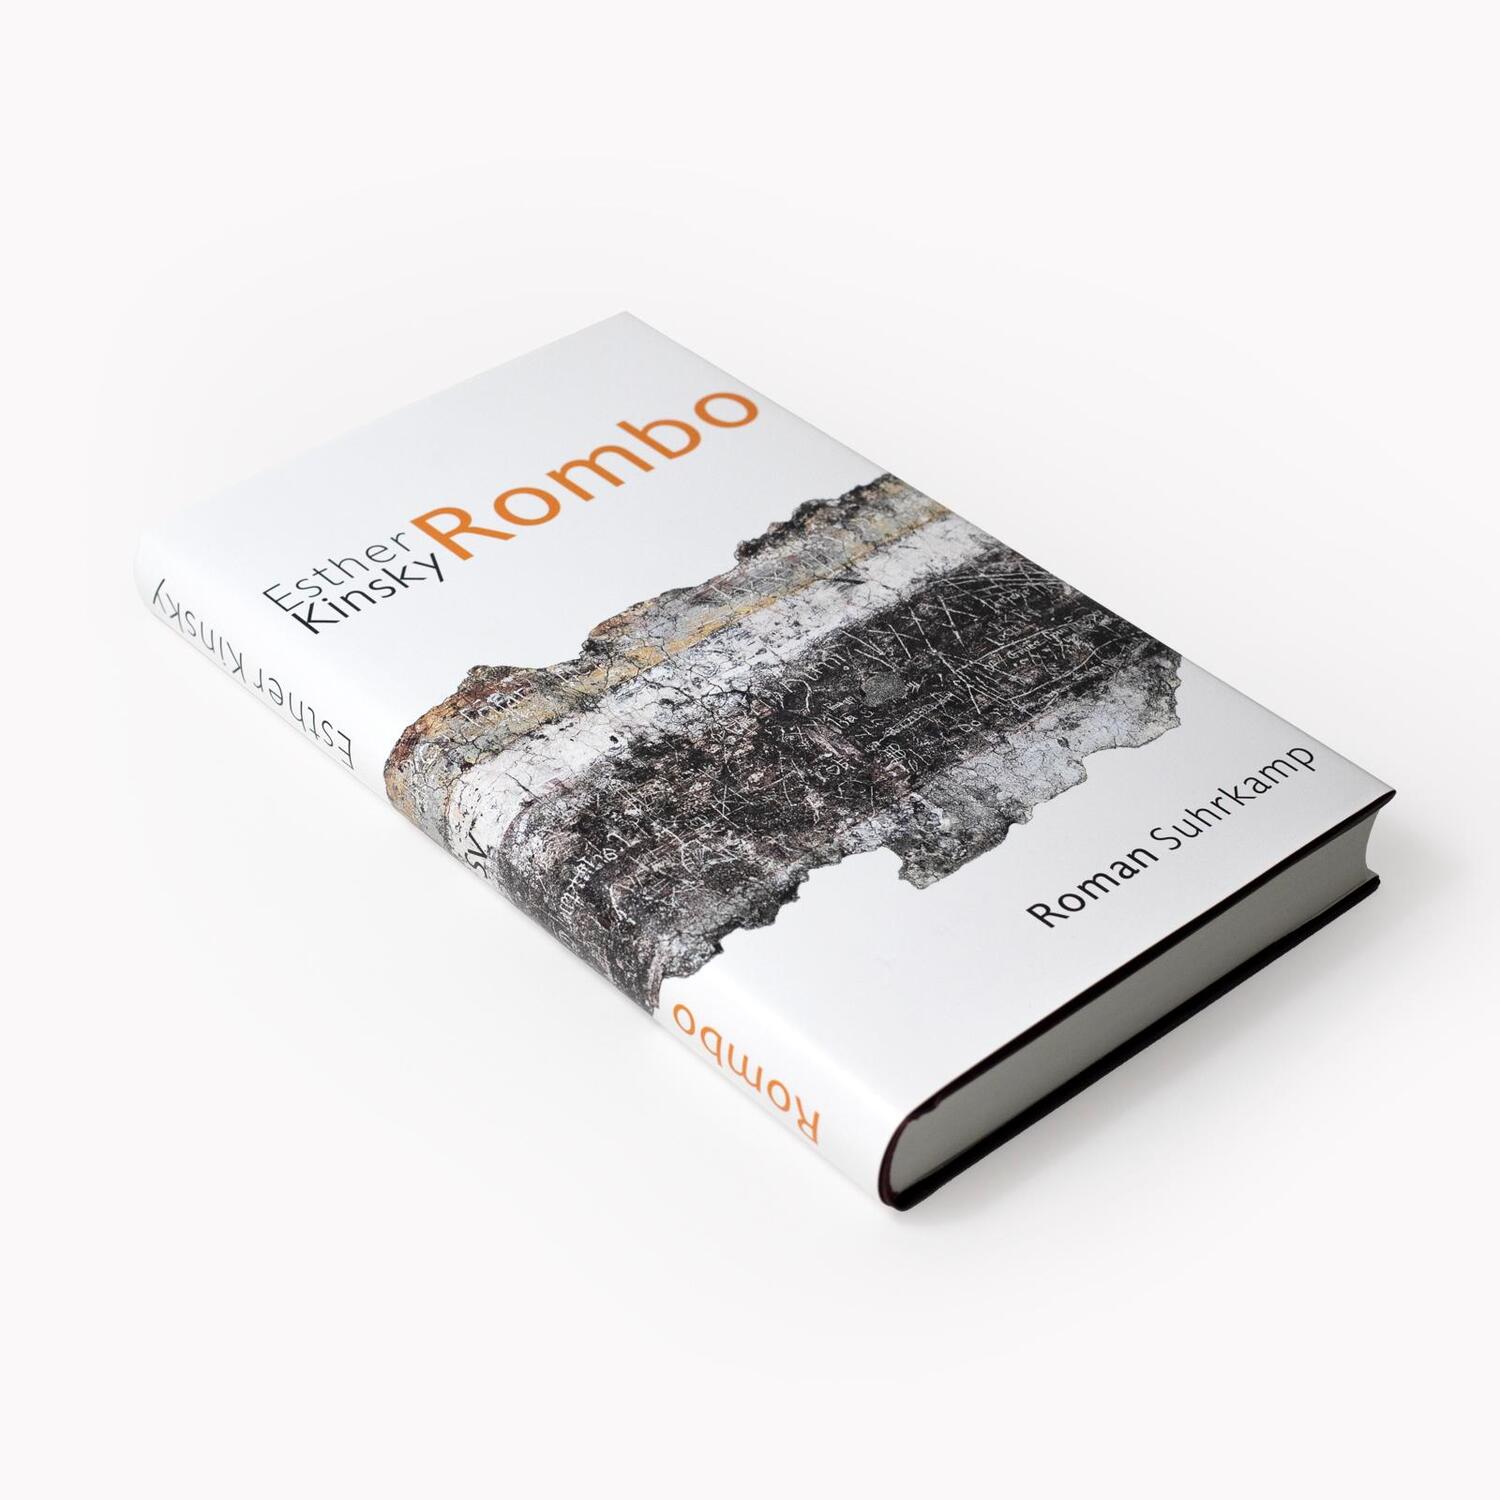 Bild: 9783518430576 | Rombo | Roman Nominiert für den Deutschen Buchpreis 2022 | Kinsky